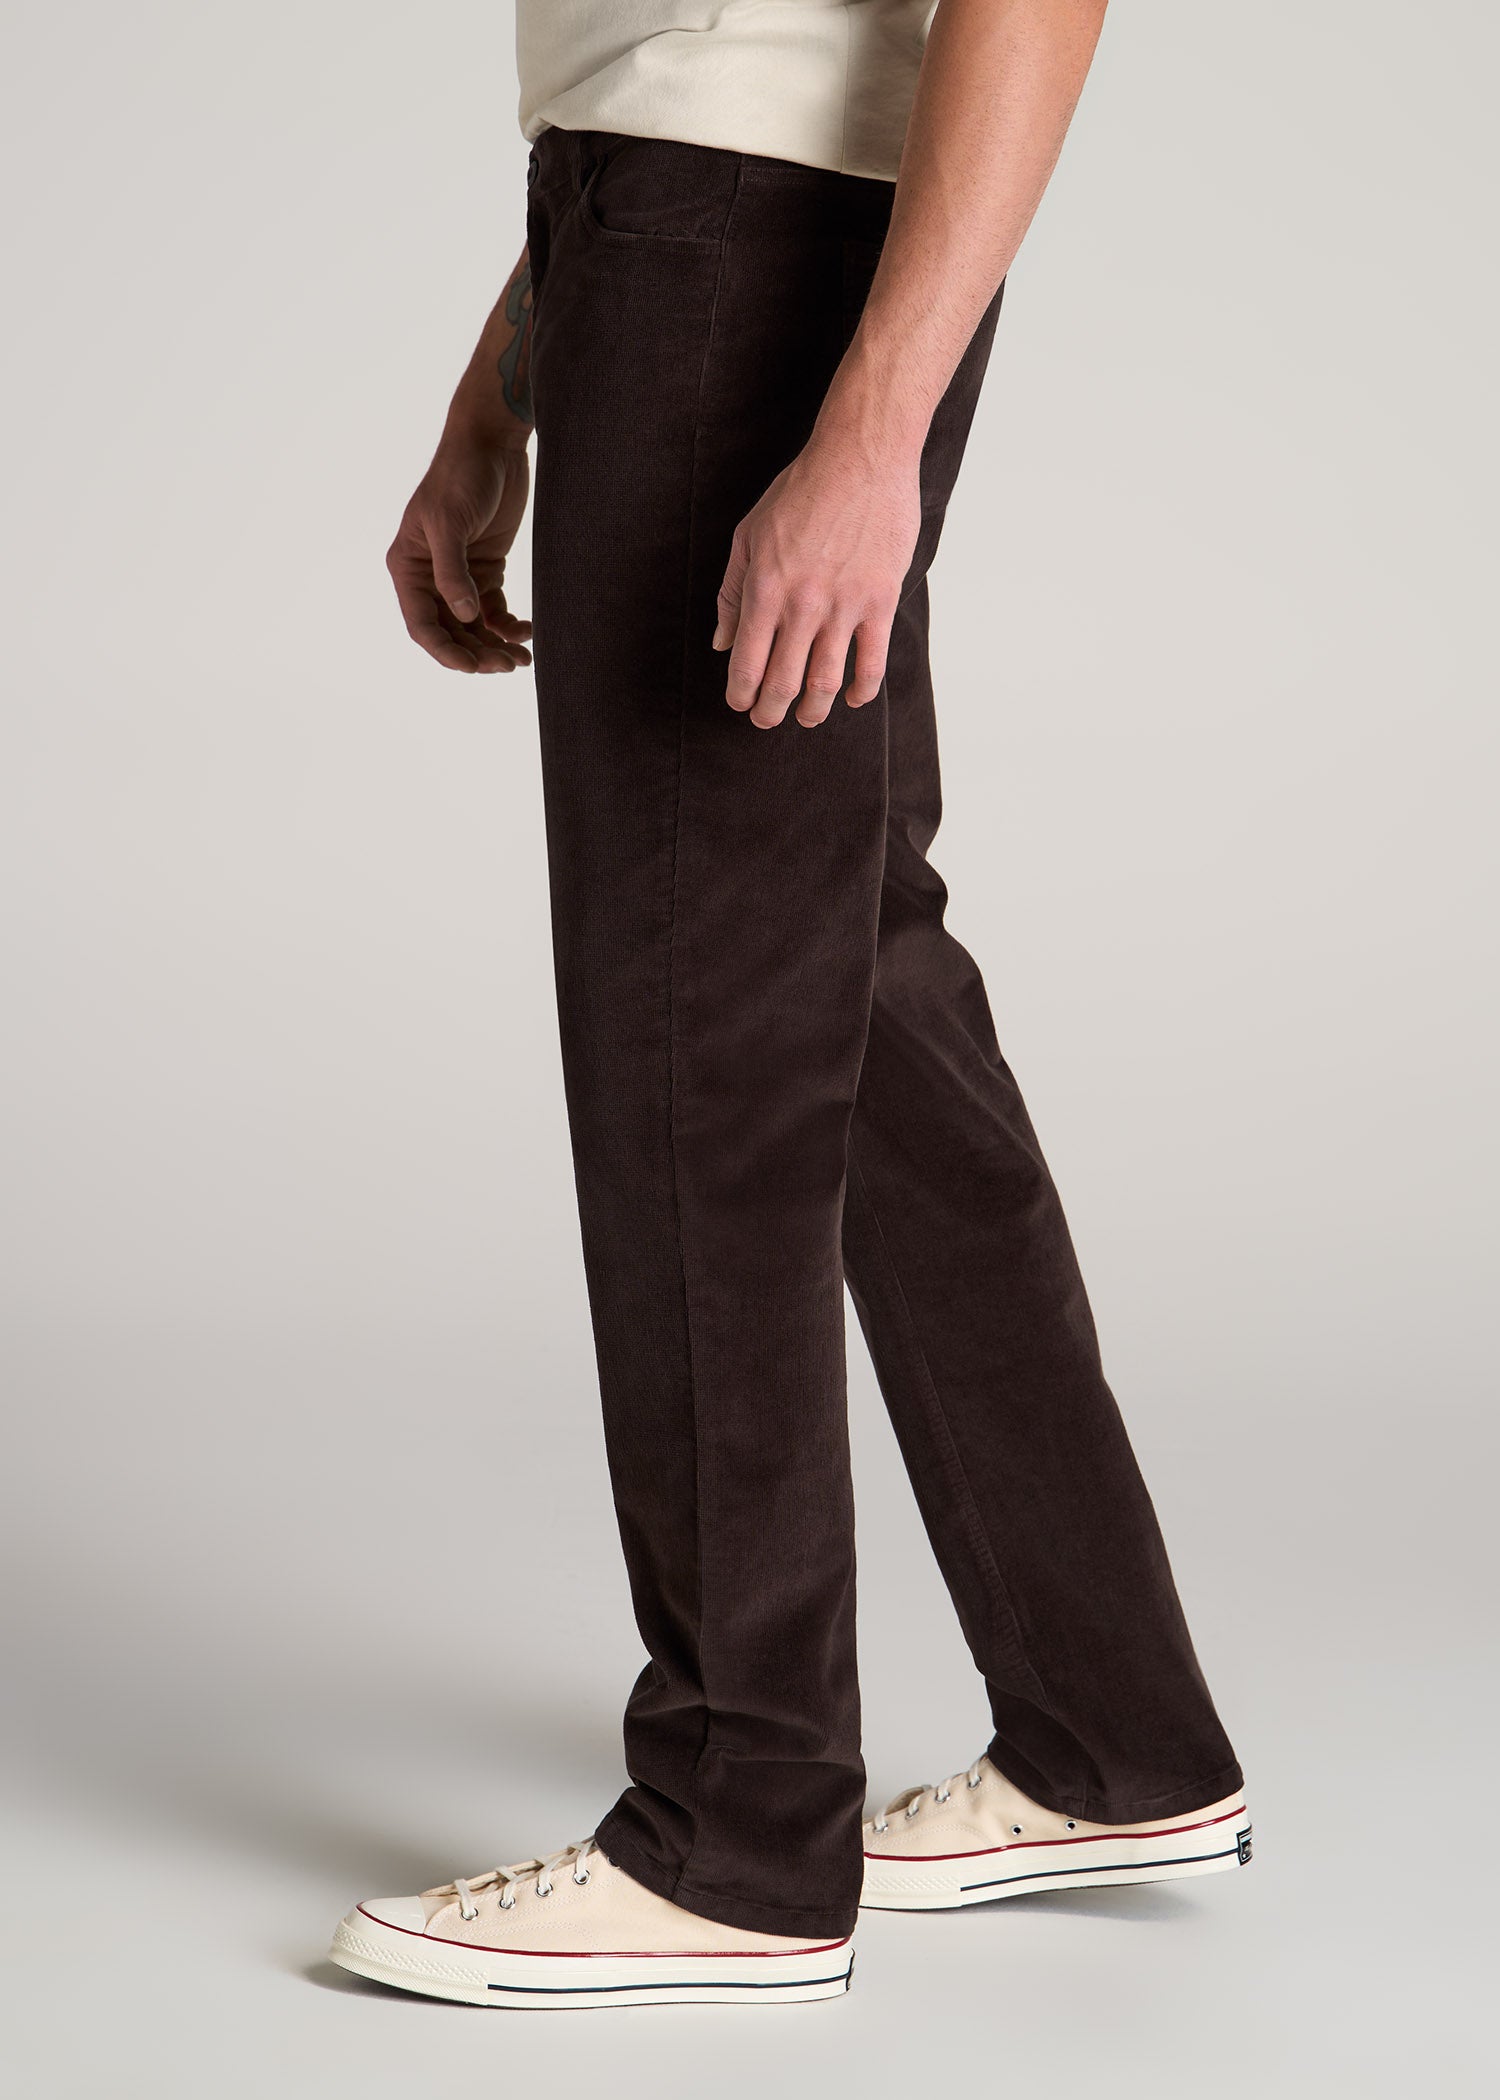 Denim & Co. Tall Corduroy Wide-Leg Full-Length Pants - QVC.com